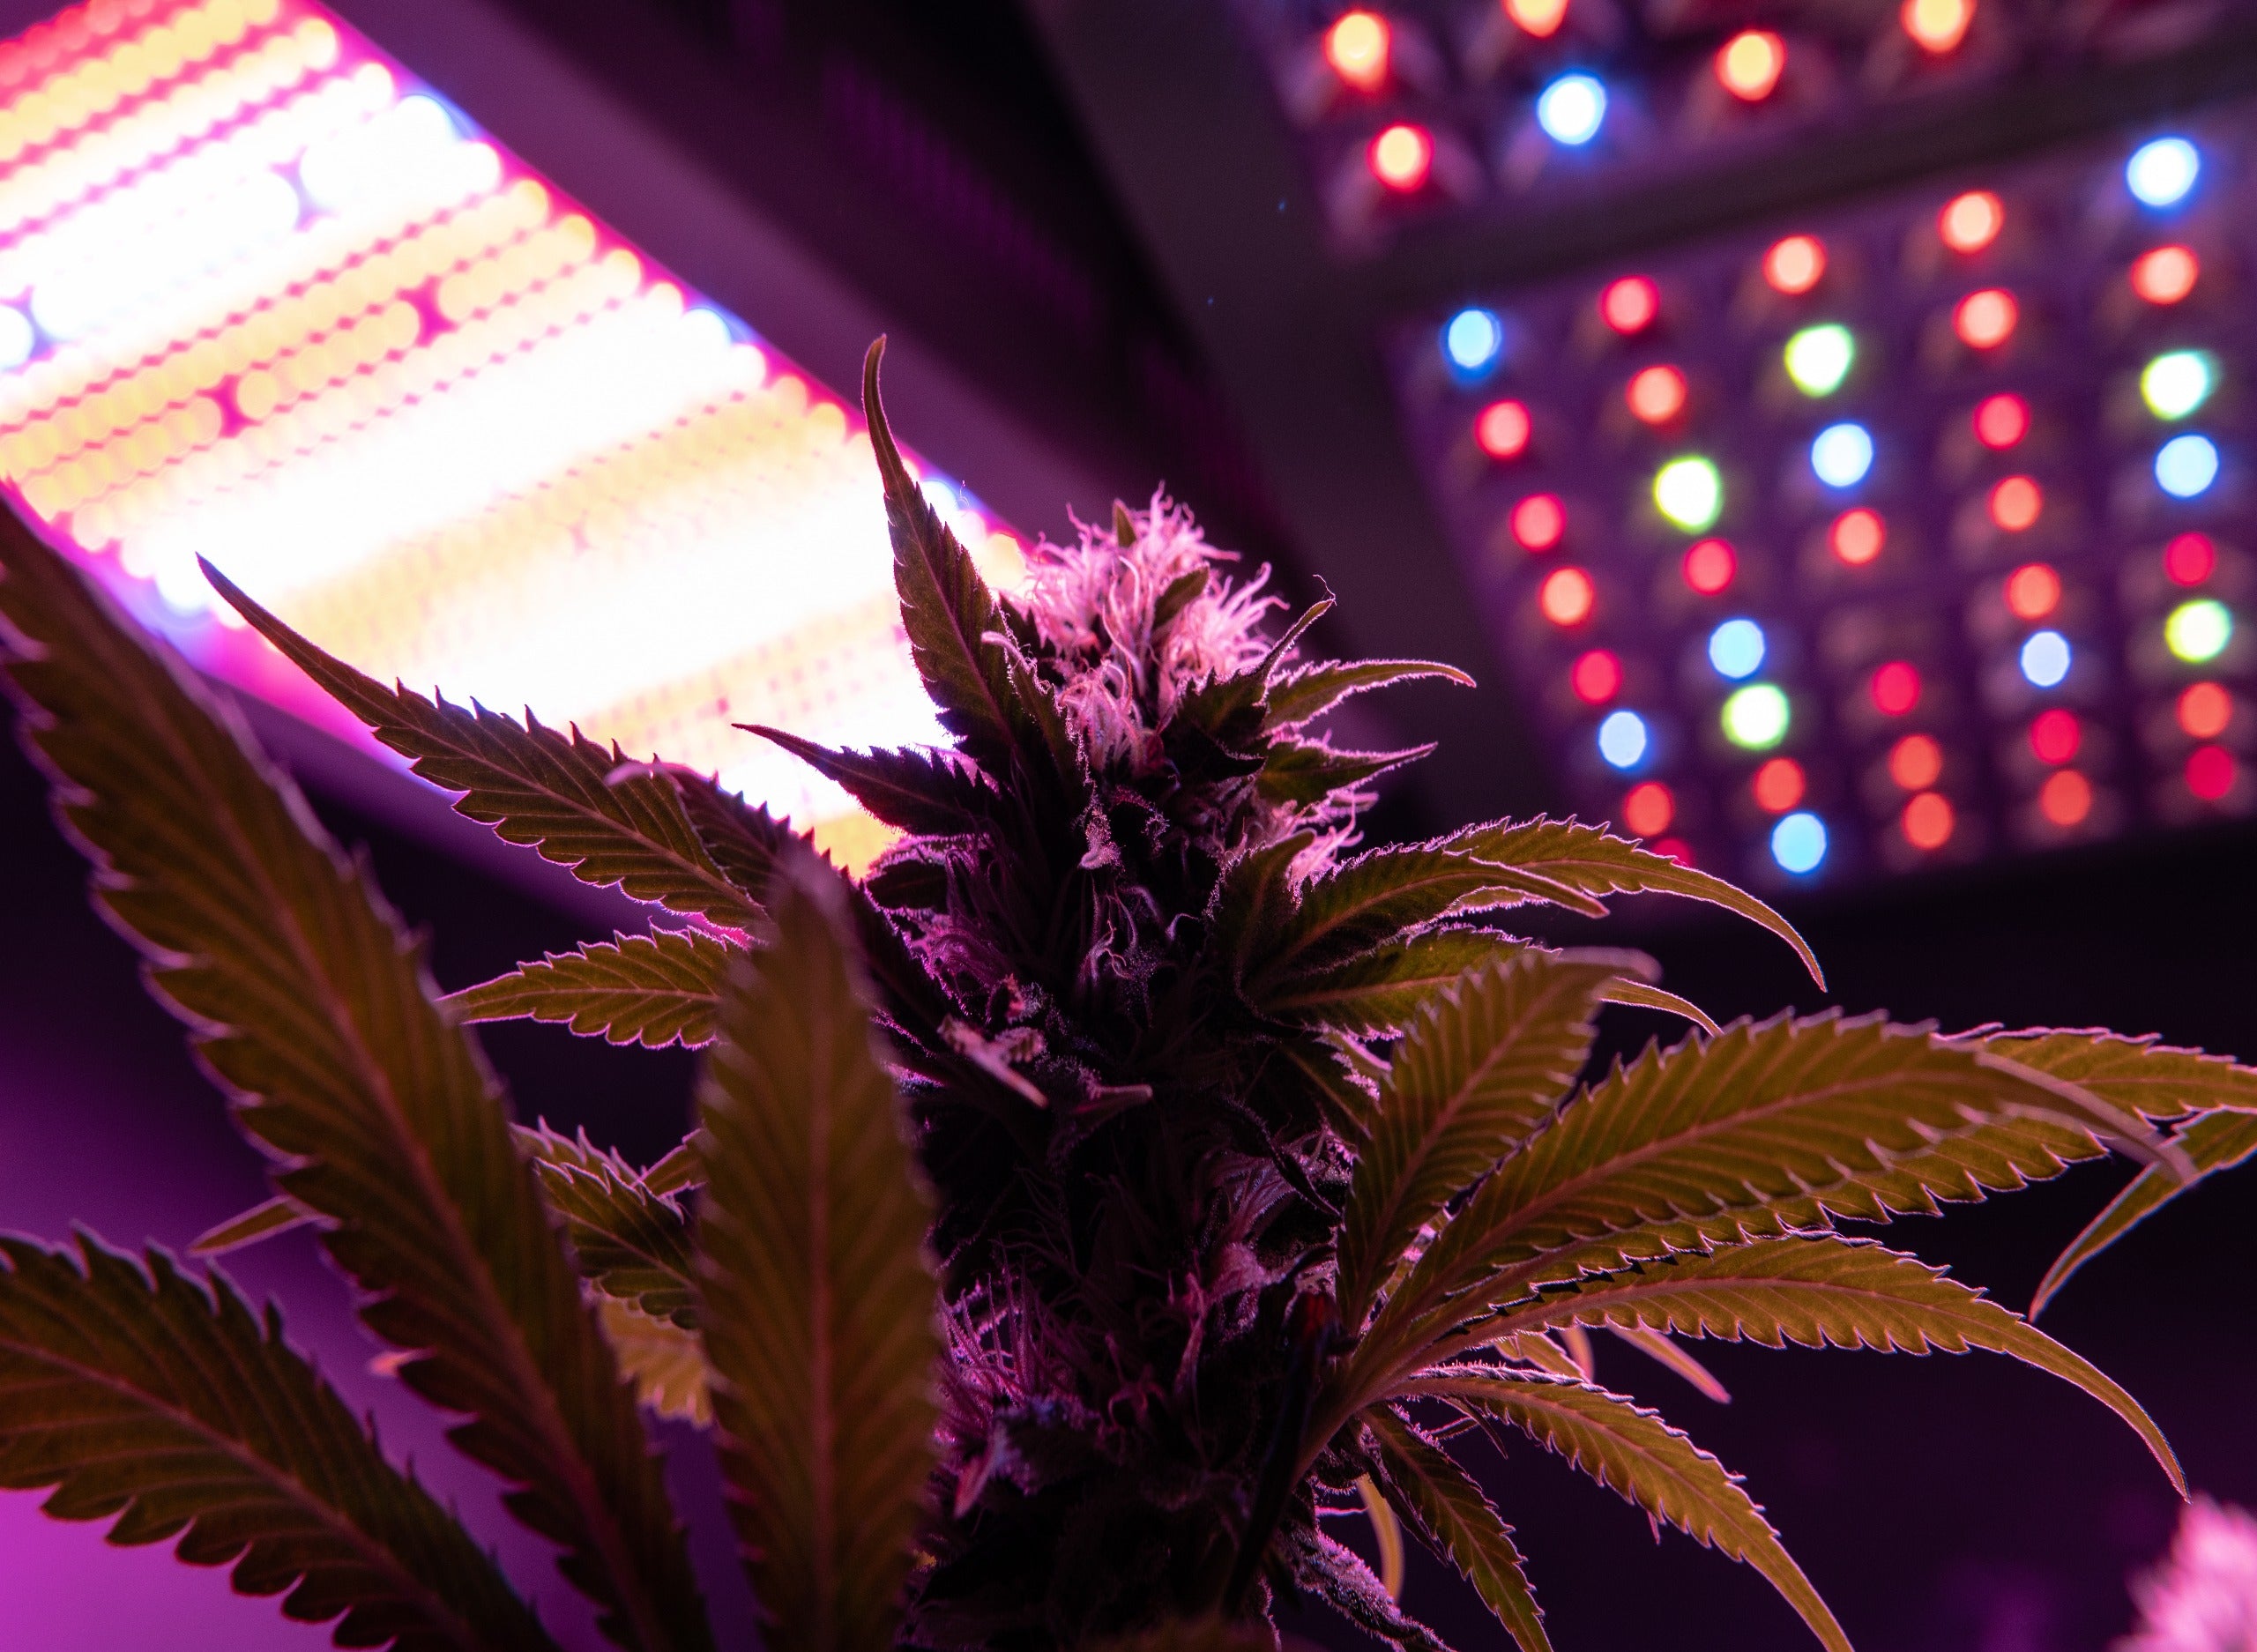 An Overview of Cannabis Grow Lights: Heat, Cost, Yields